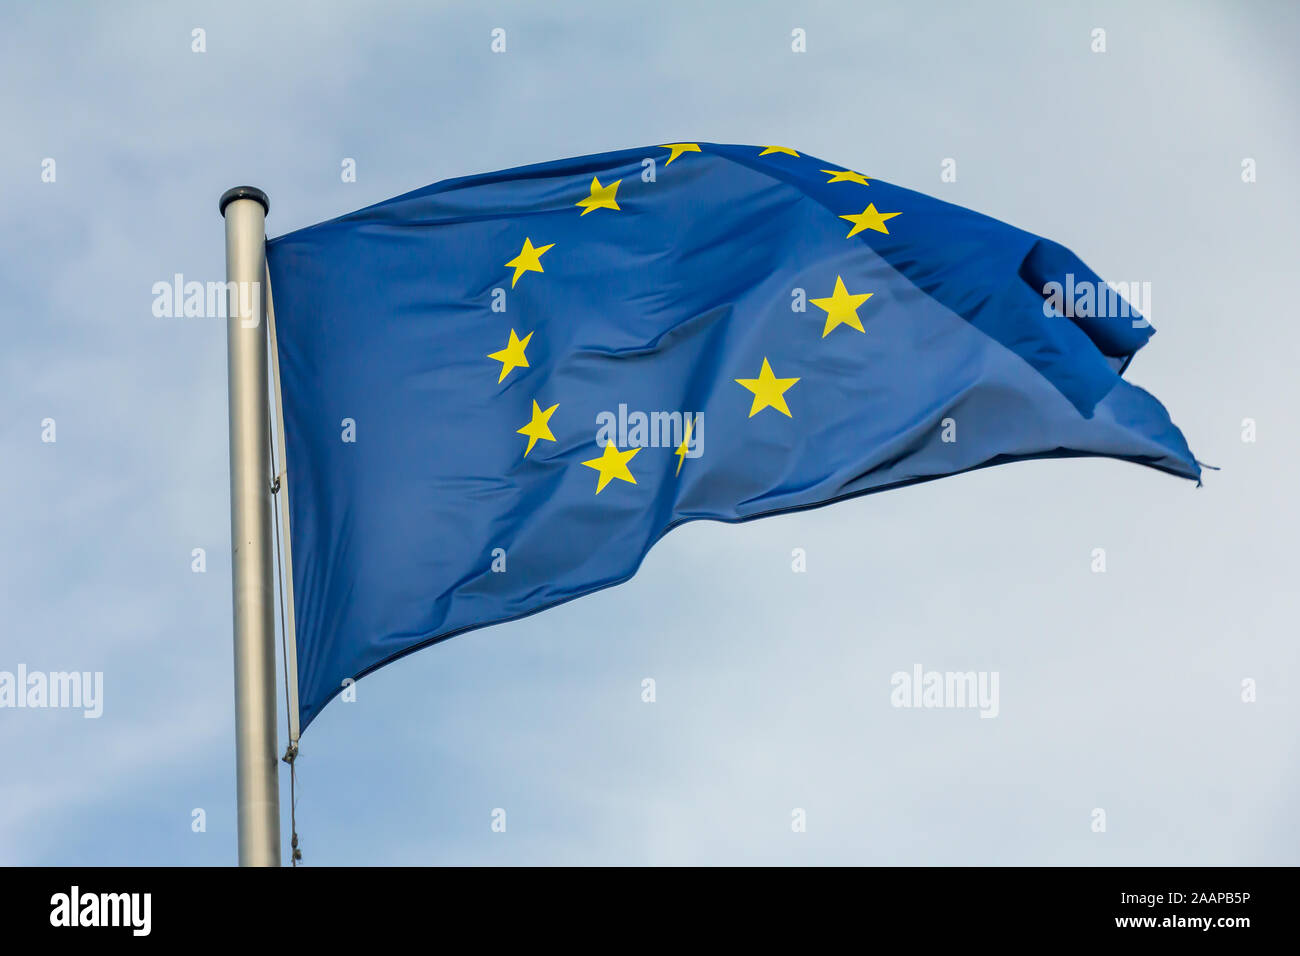 EU, Europe, European Union flag waving on blue sky background Stock Photo